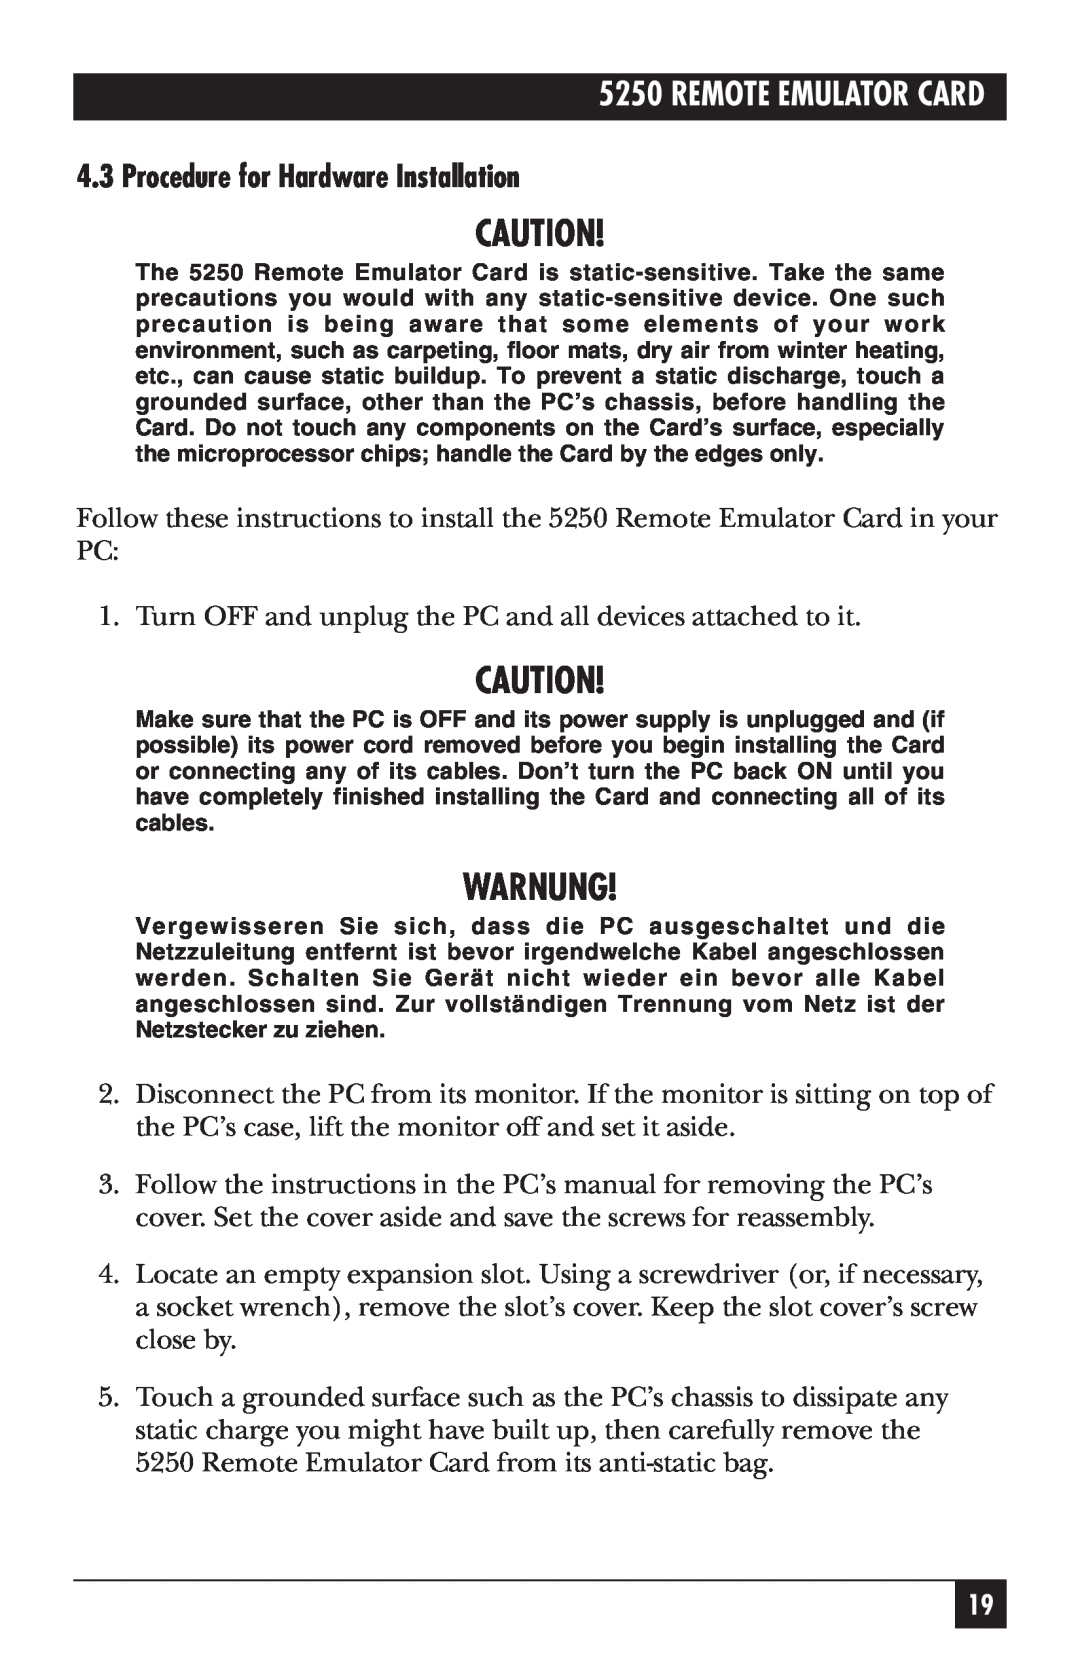 Black Box Remote Emulator Card, 5250 manual Procedure for Hardware Installation, Warnung 